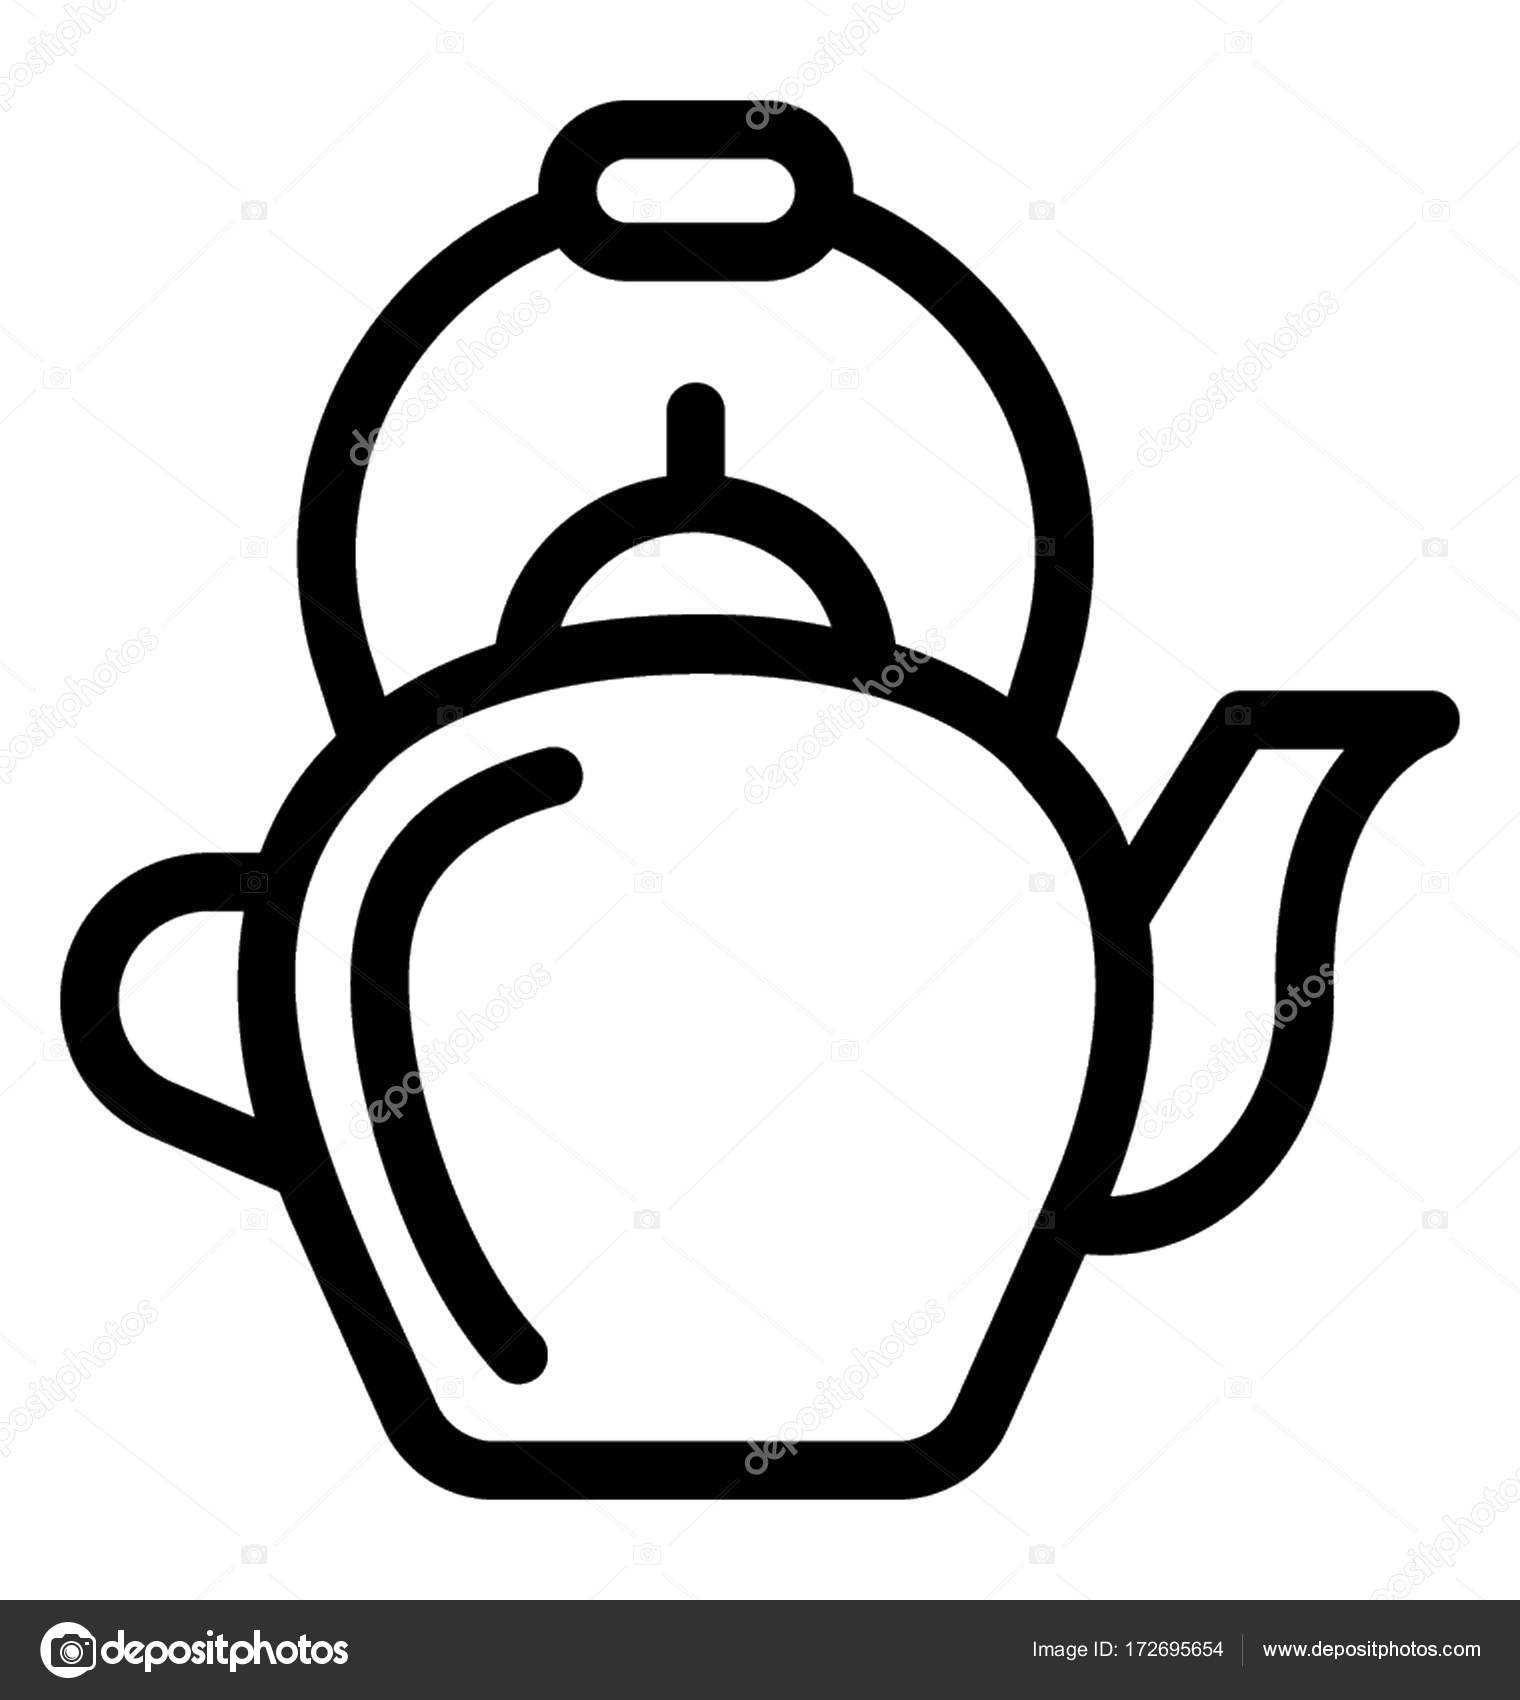 https://st3.depositphotos.com/5532432/17269/v/1600/depositphotos_172695654-stock-illustration-tea-kettle-vector-icon.jpg